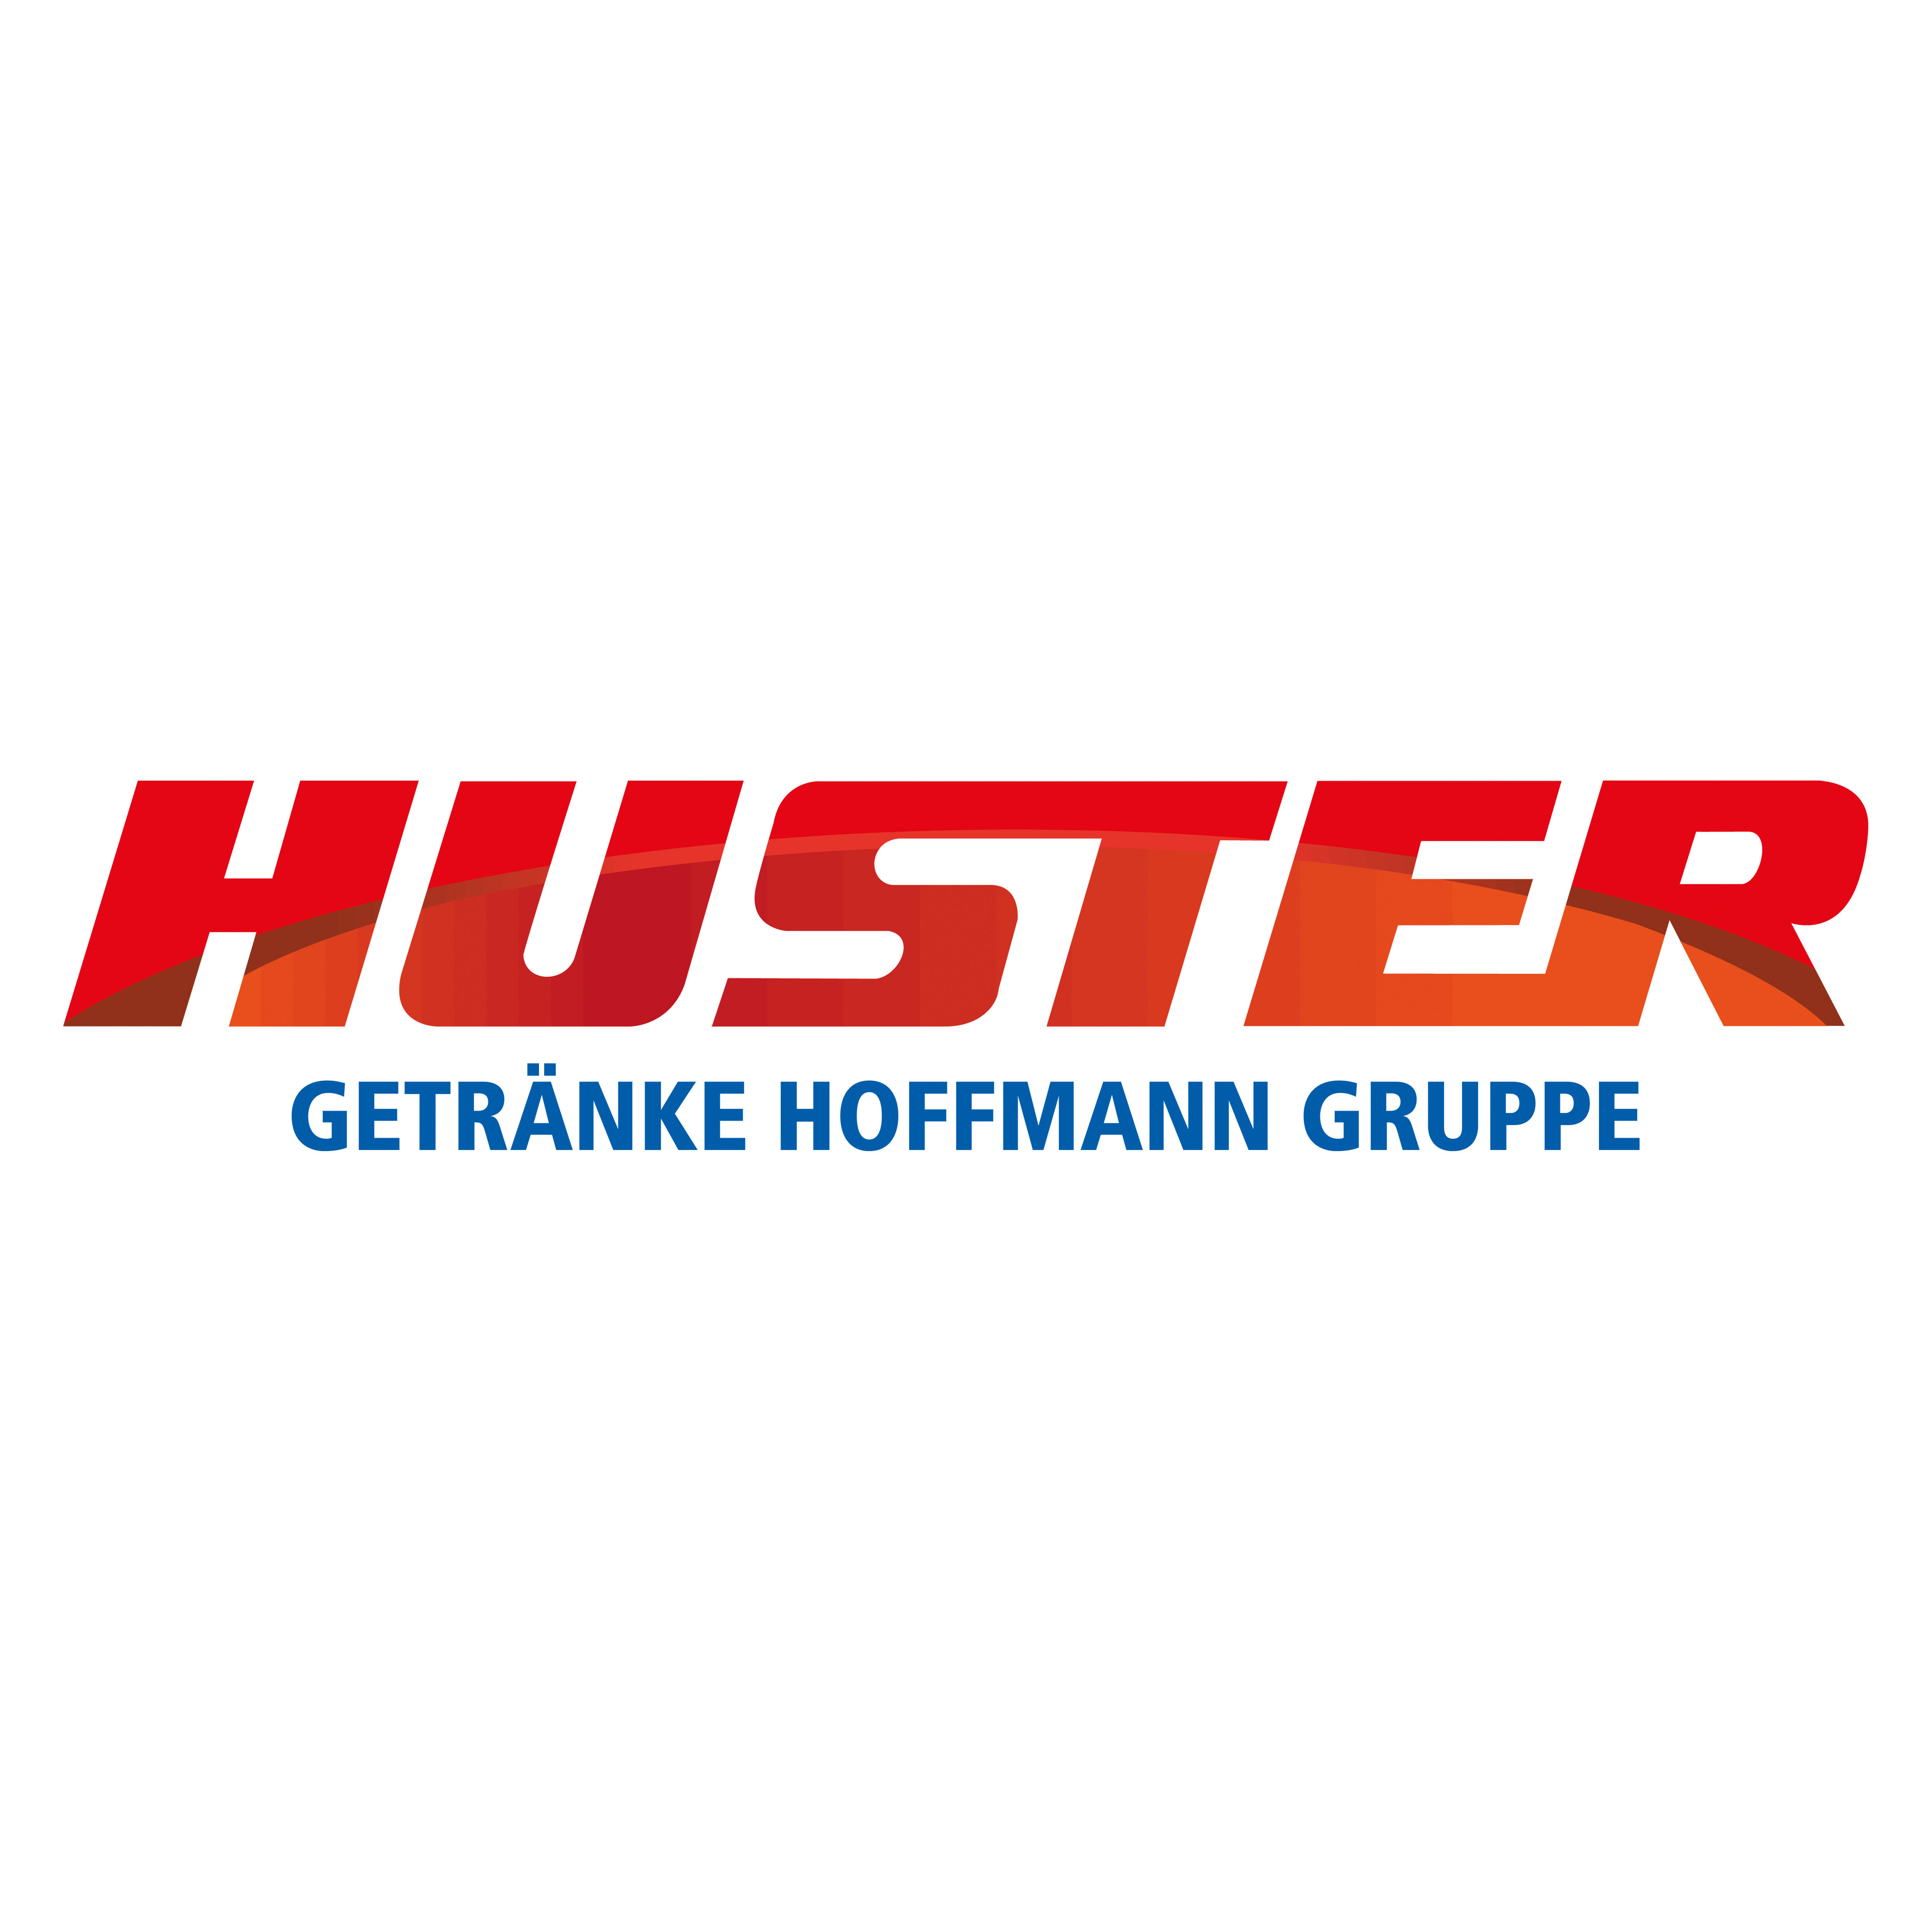 Huster Getränke Hoffmann Gruppe in Leipzig - Logo